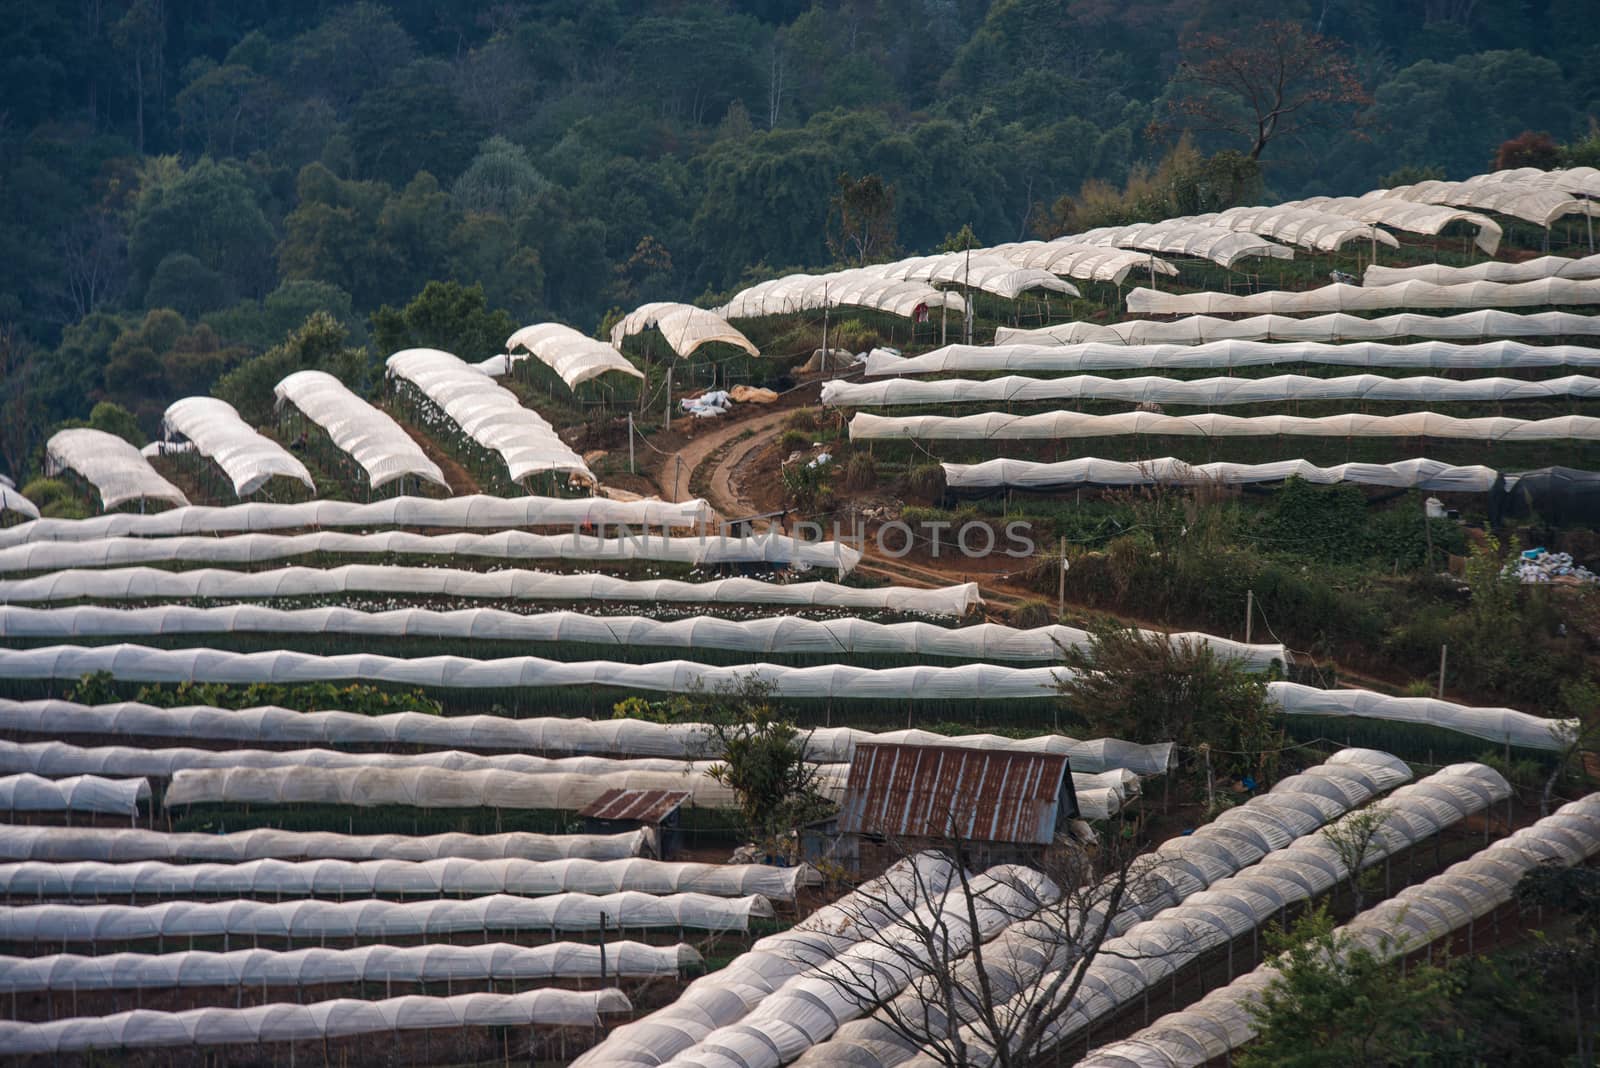 Greenhouse Plant  Doi Inthanon, Chiang Mai, Thailand by jakgree